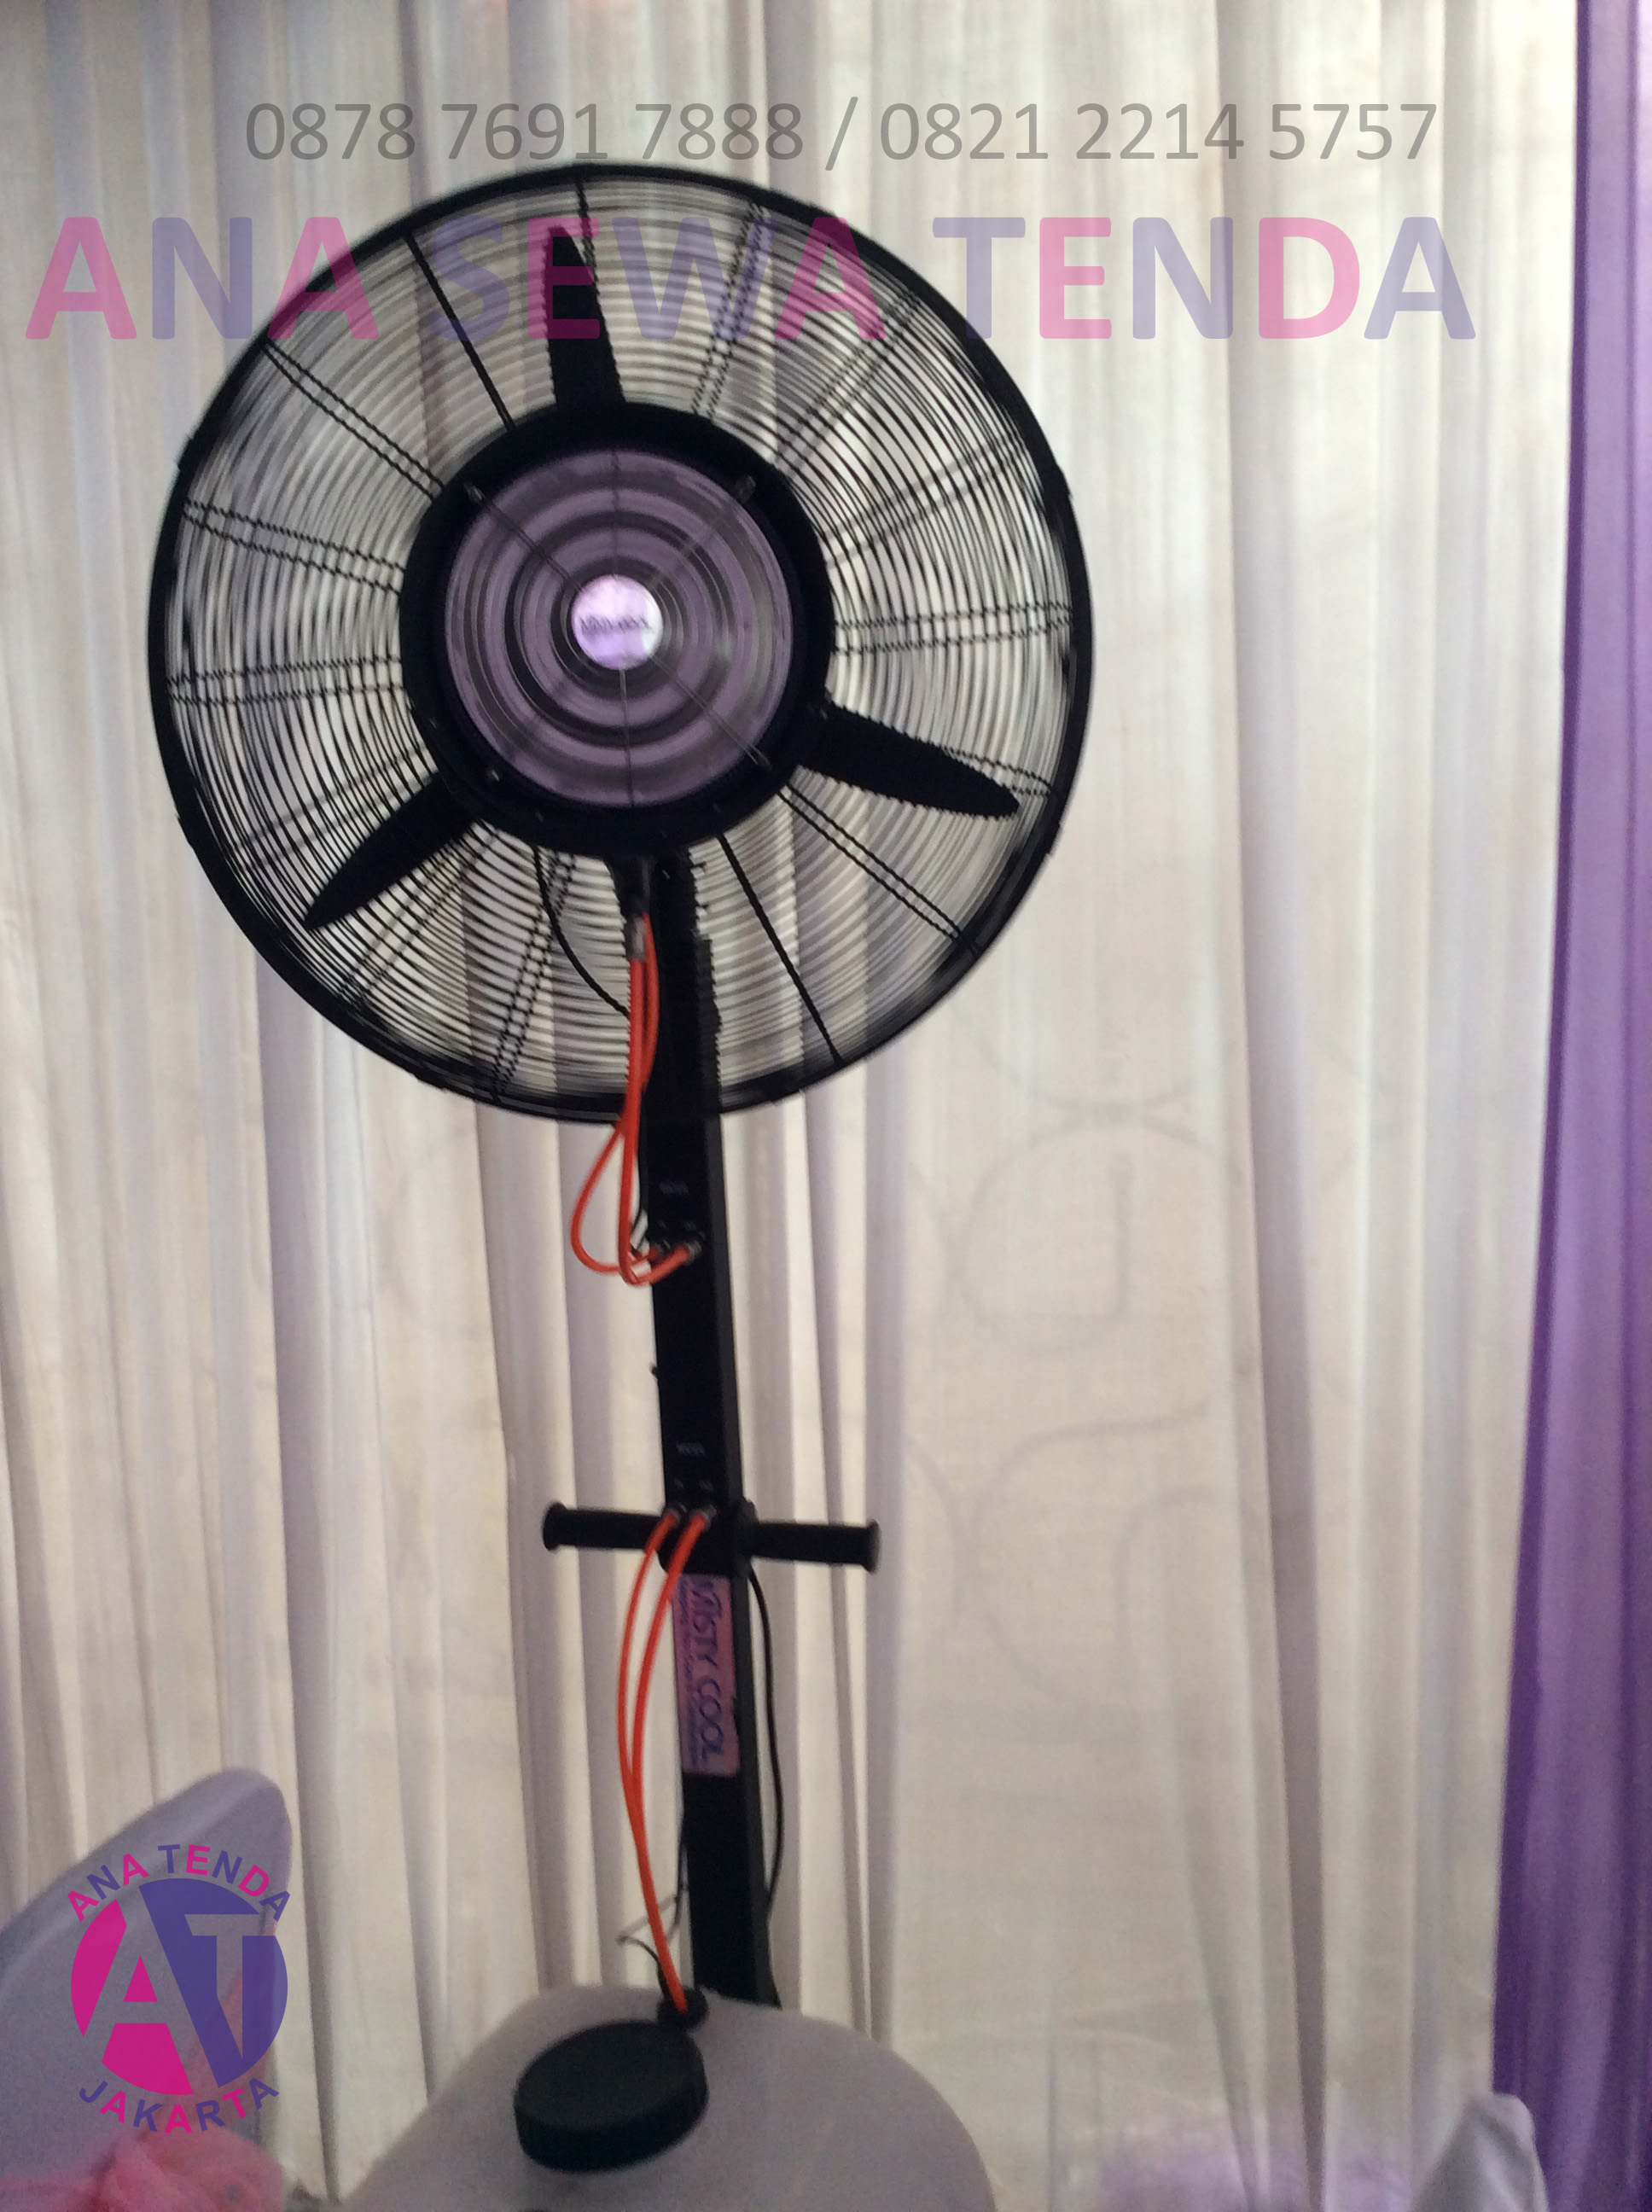 AnaSewaTenda Cooling Fan